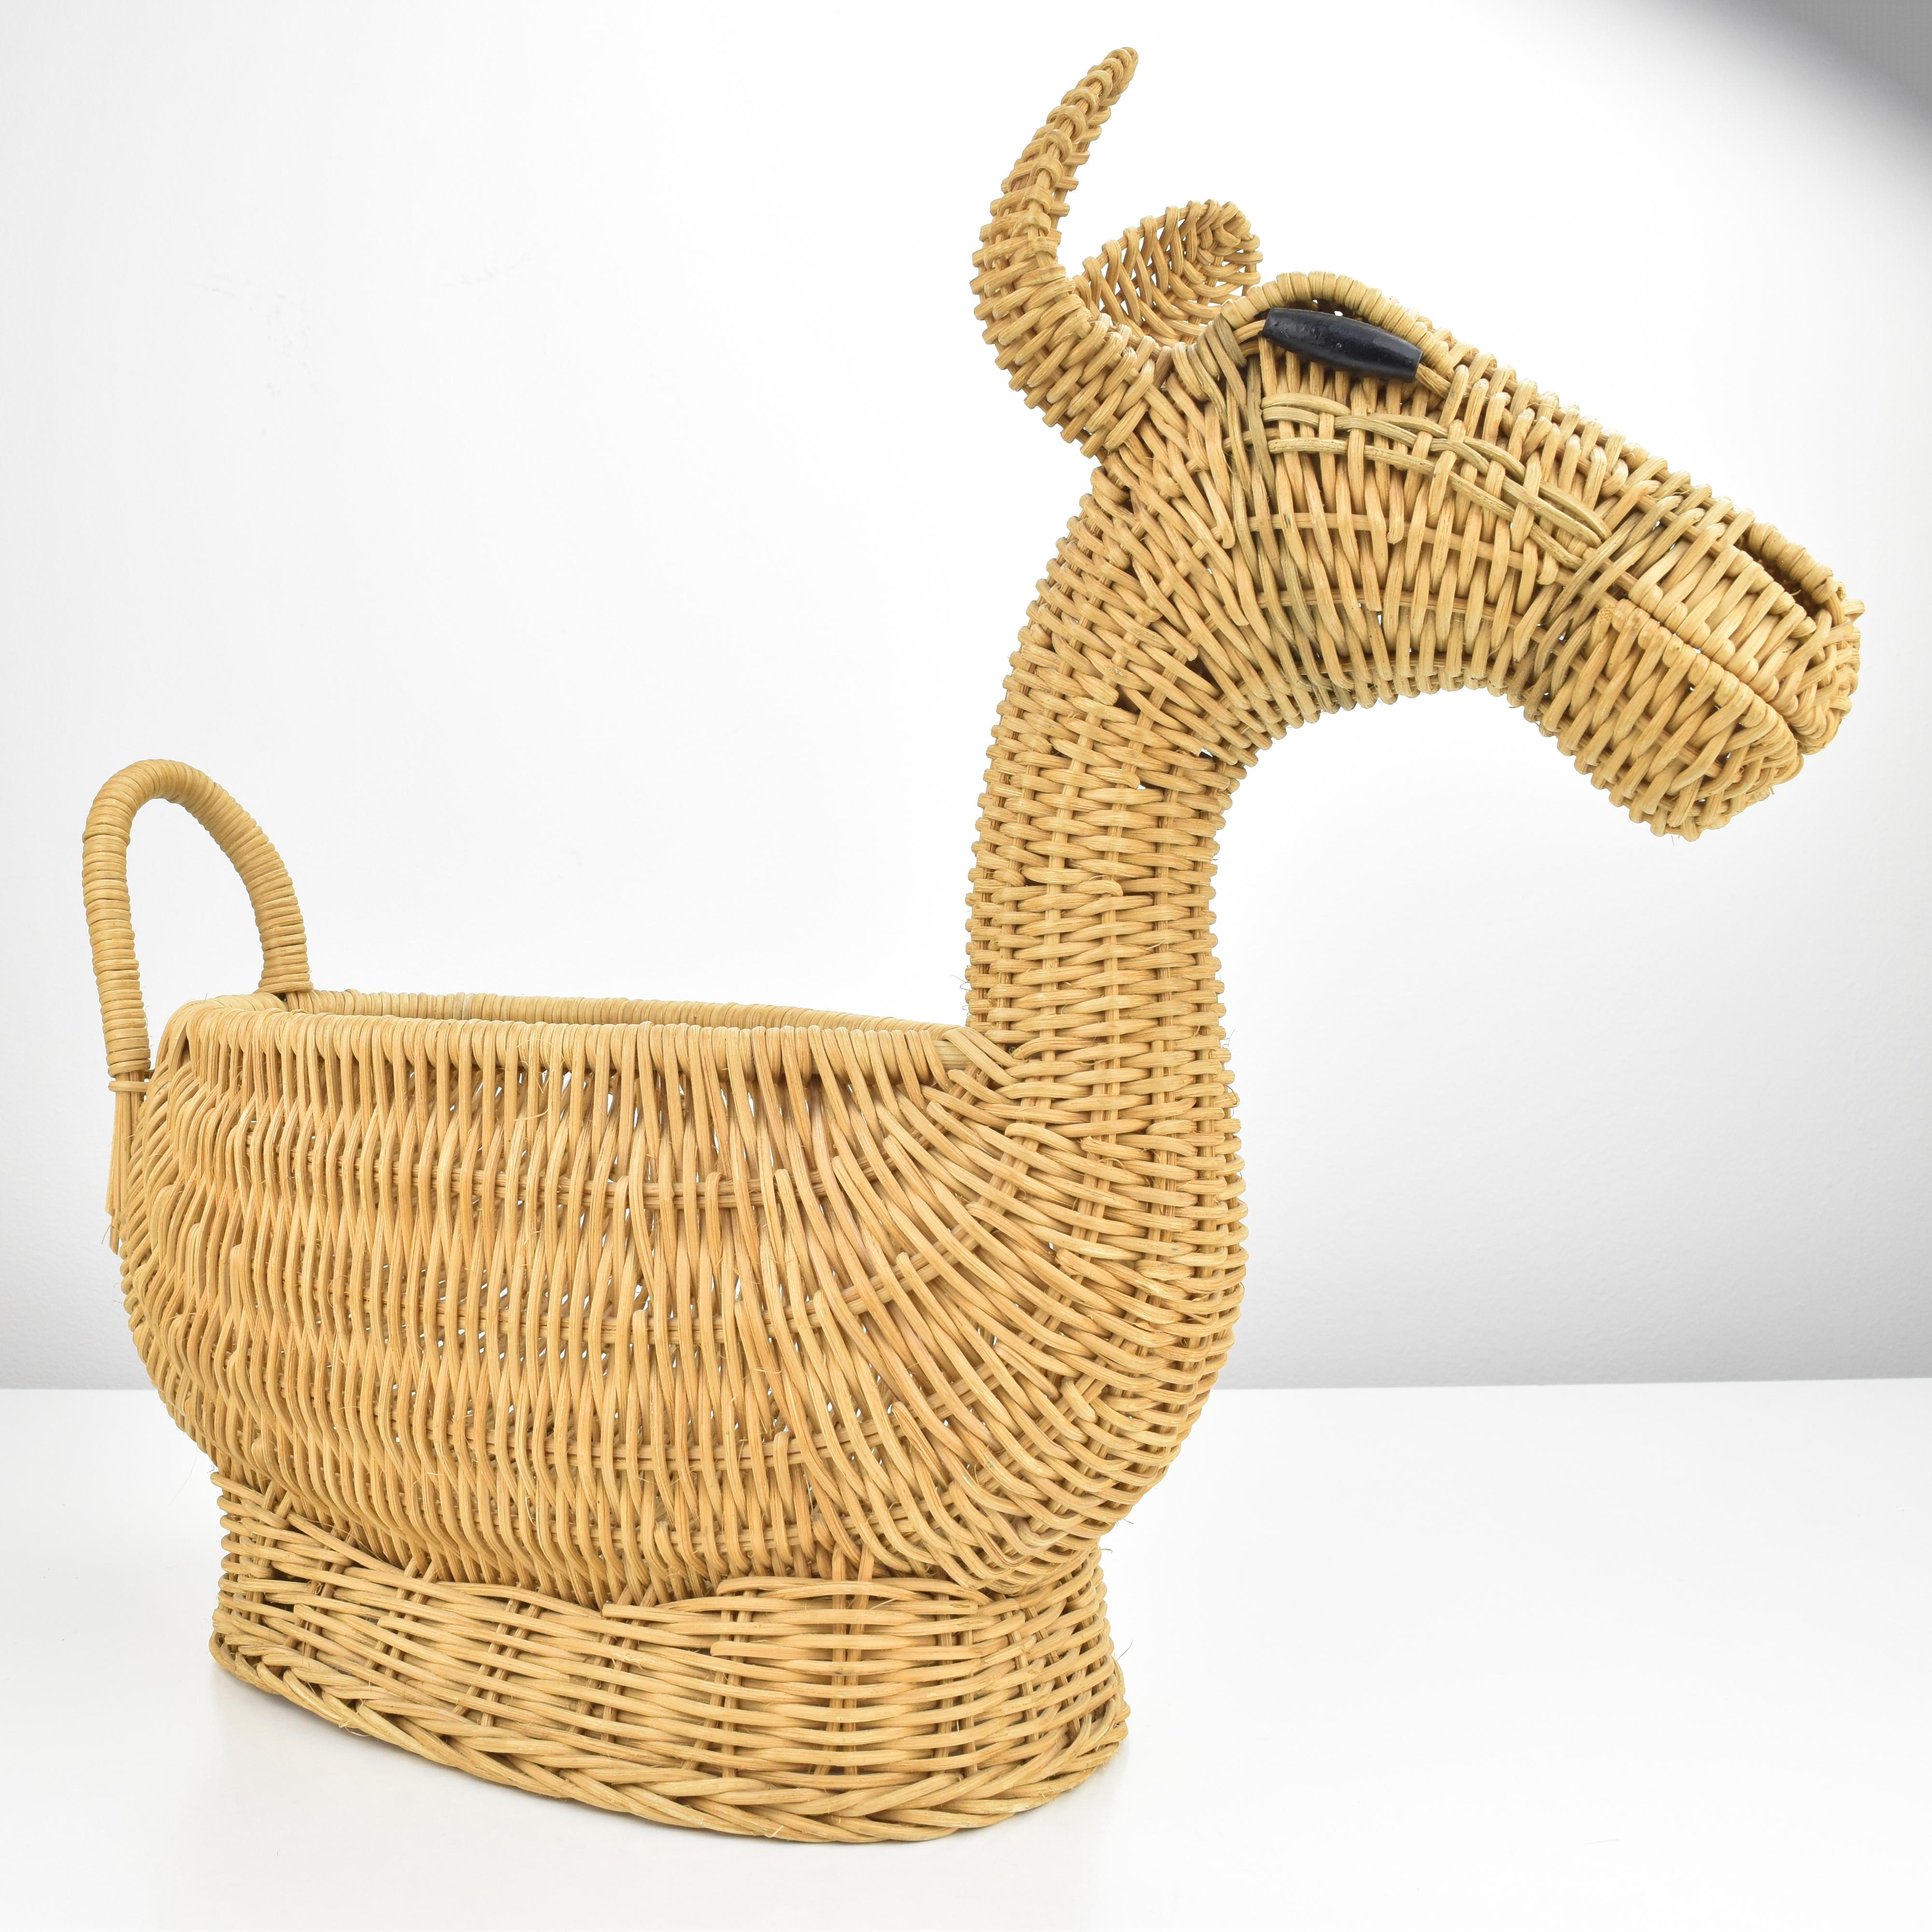 Sculptural French Wicker Rattan Cane Alpaca Fruit Basket Bowl MCM Boho Tiki In Excellent Condition For Sale In Bad Säckingen, DE